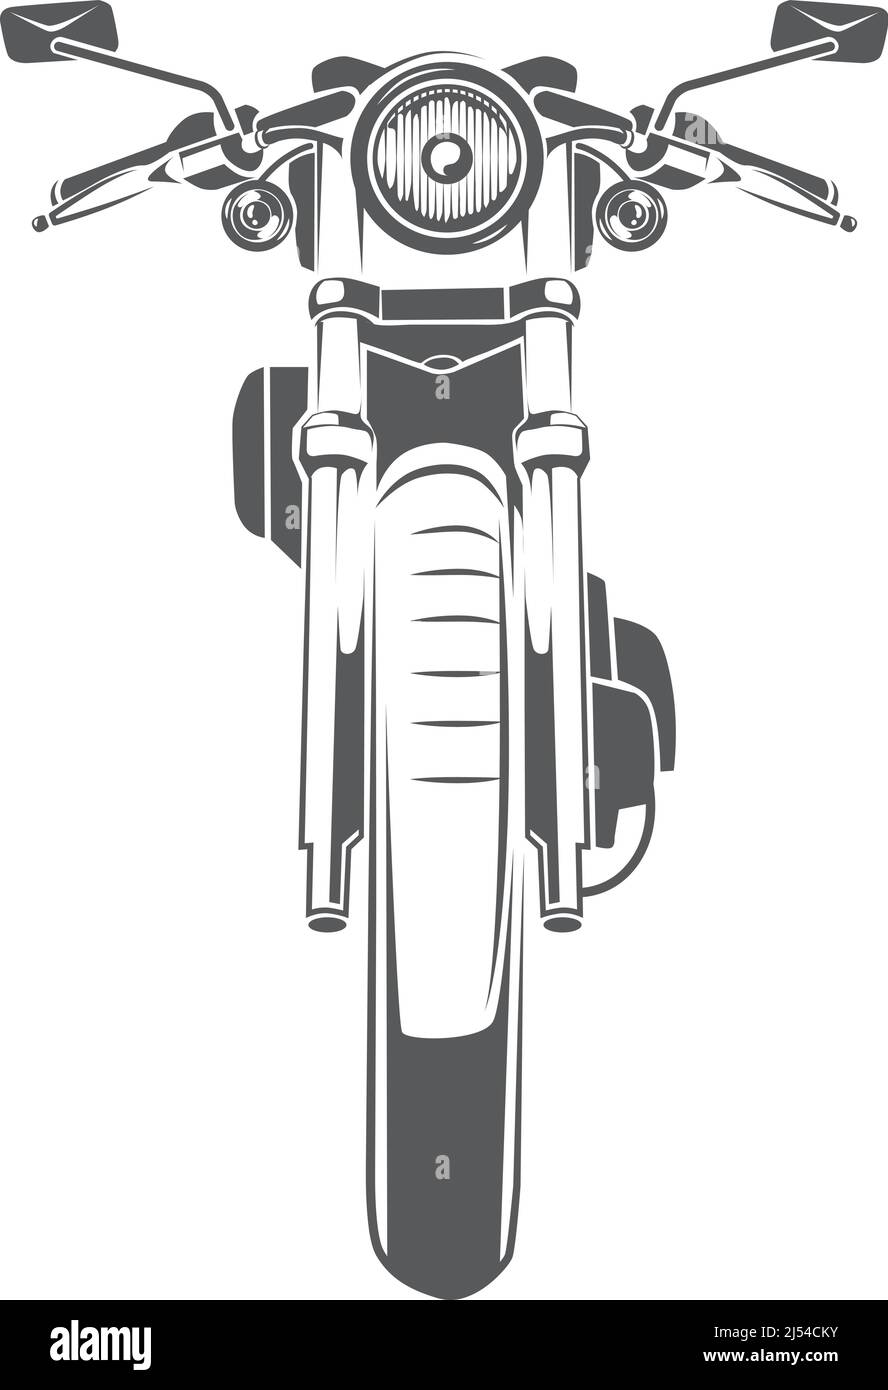 Motorbike front side. Bike logo. Fast ride symbol Stock Vector